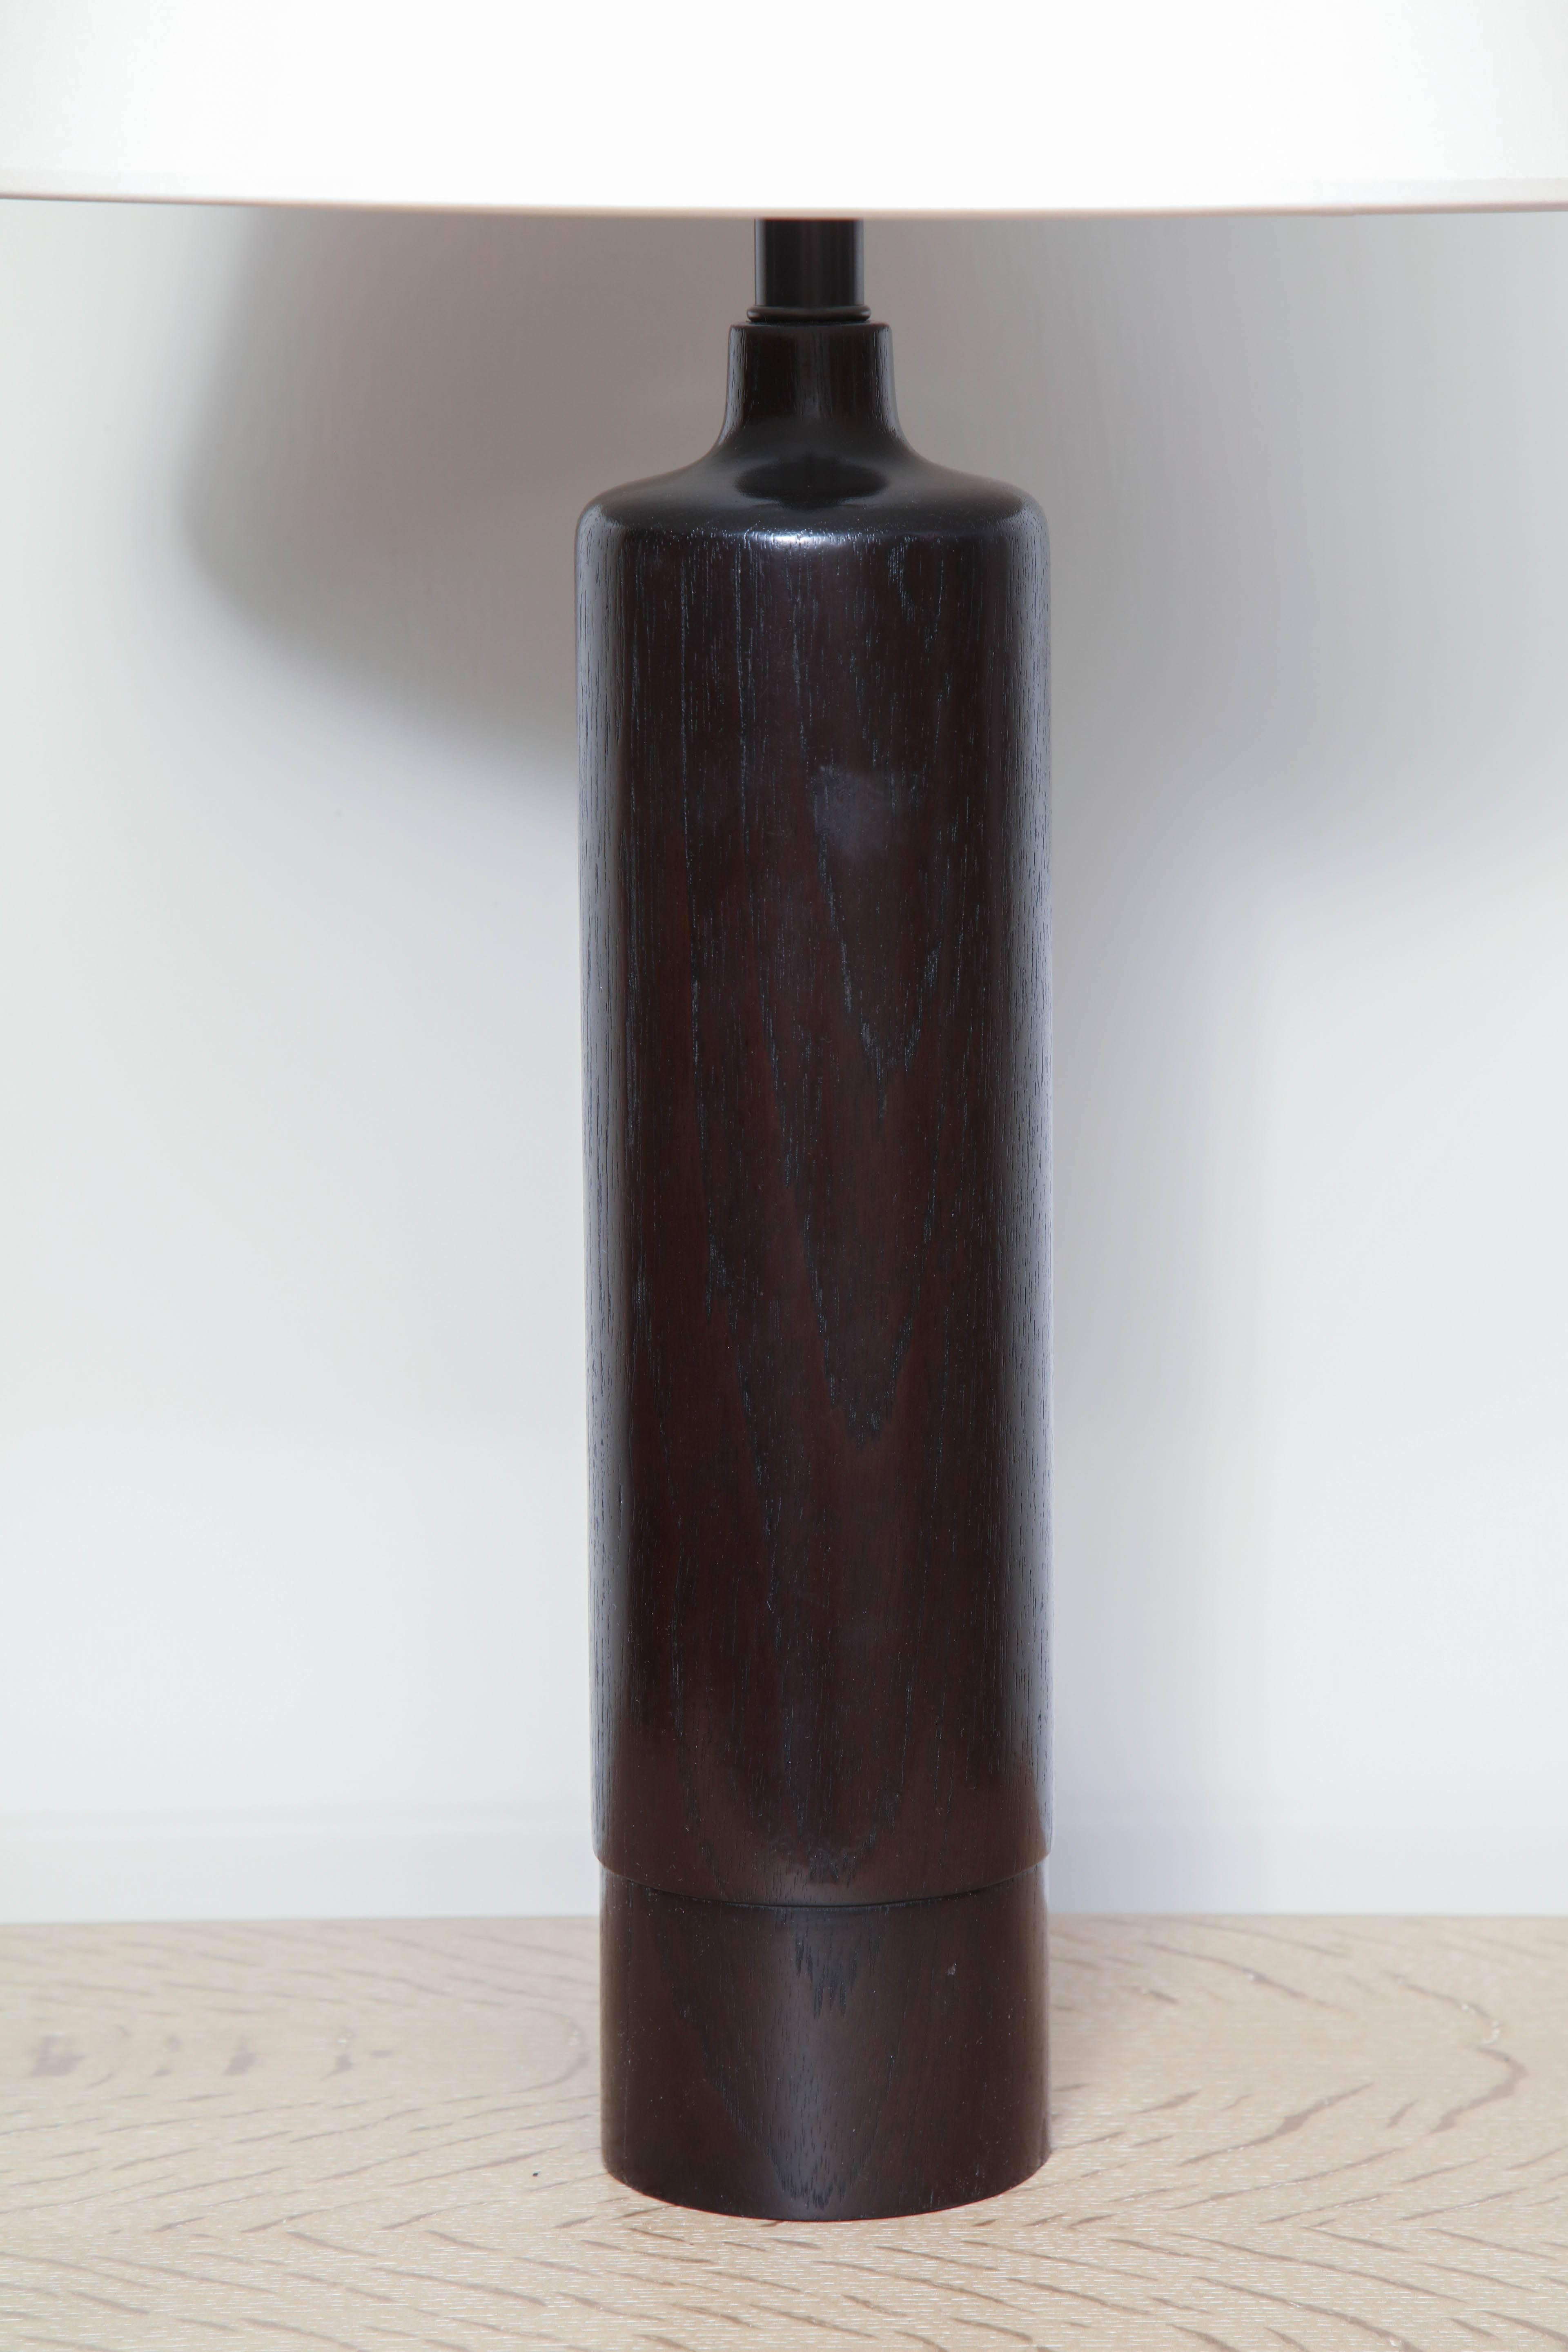 Ebonized turned oak Danish table lamp with bronze hardware and dimmer socket, circa 1950.